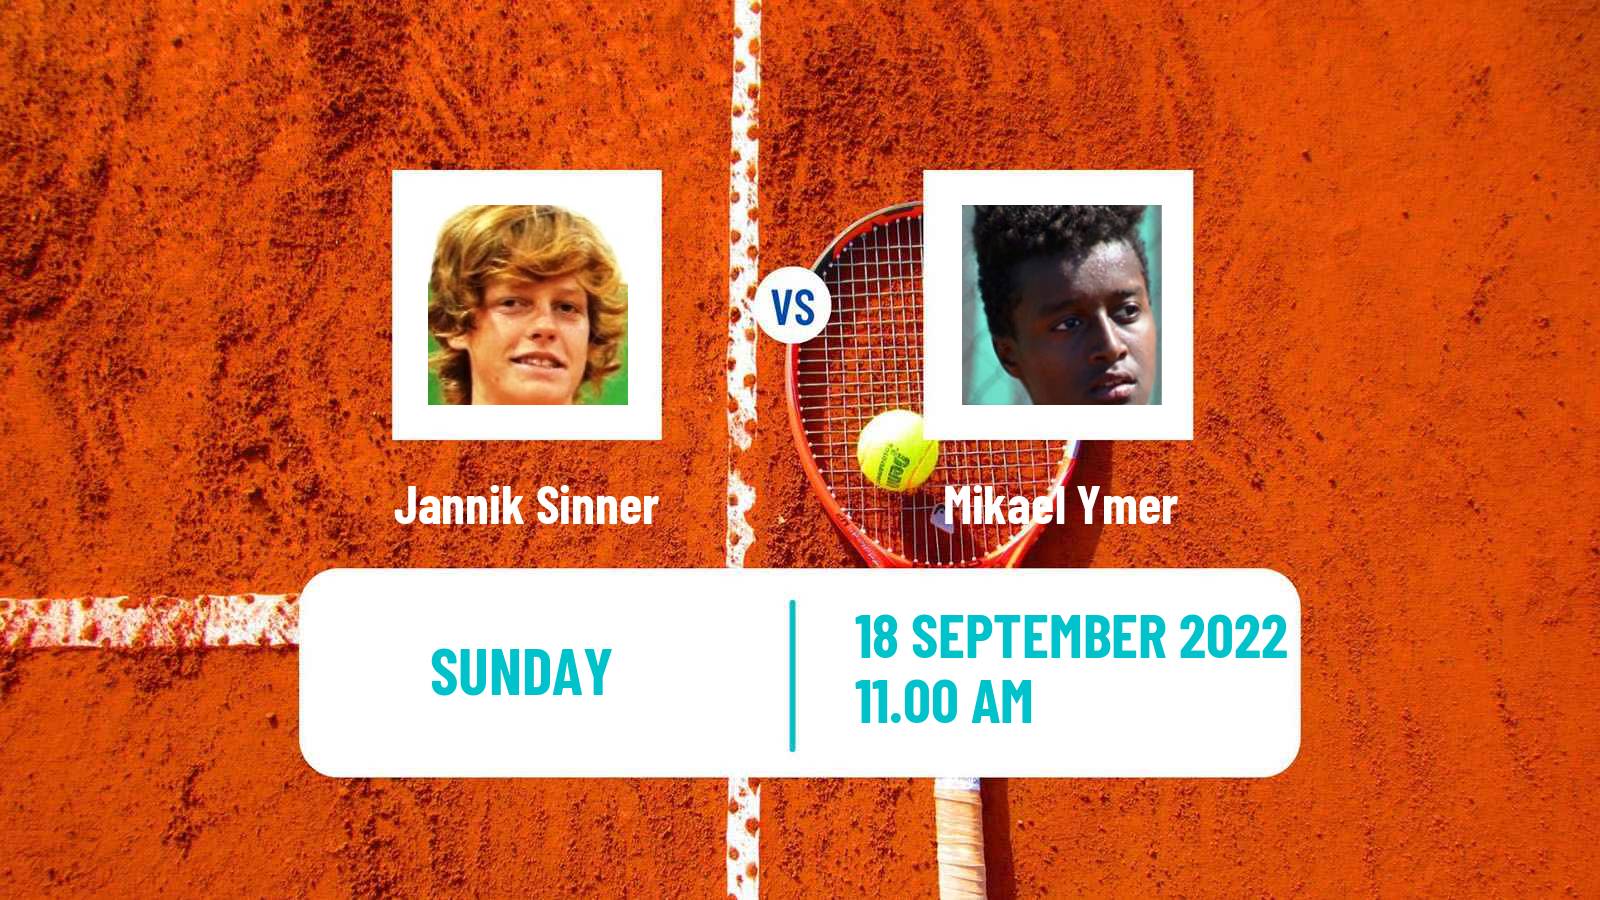 Tennis Davis Cup World Group Jannik Sinner - Mikael Ymer